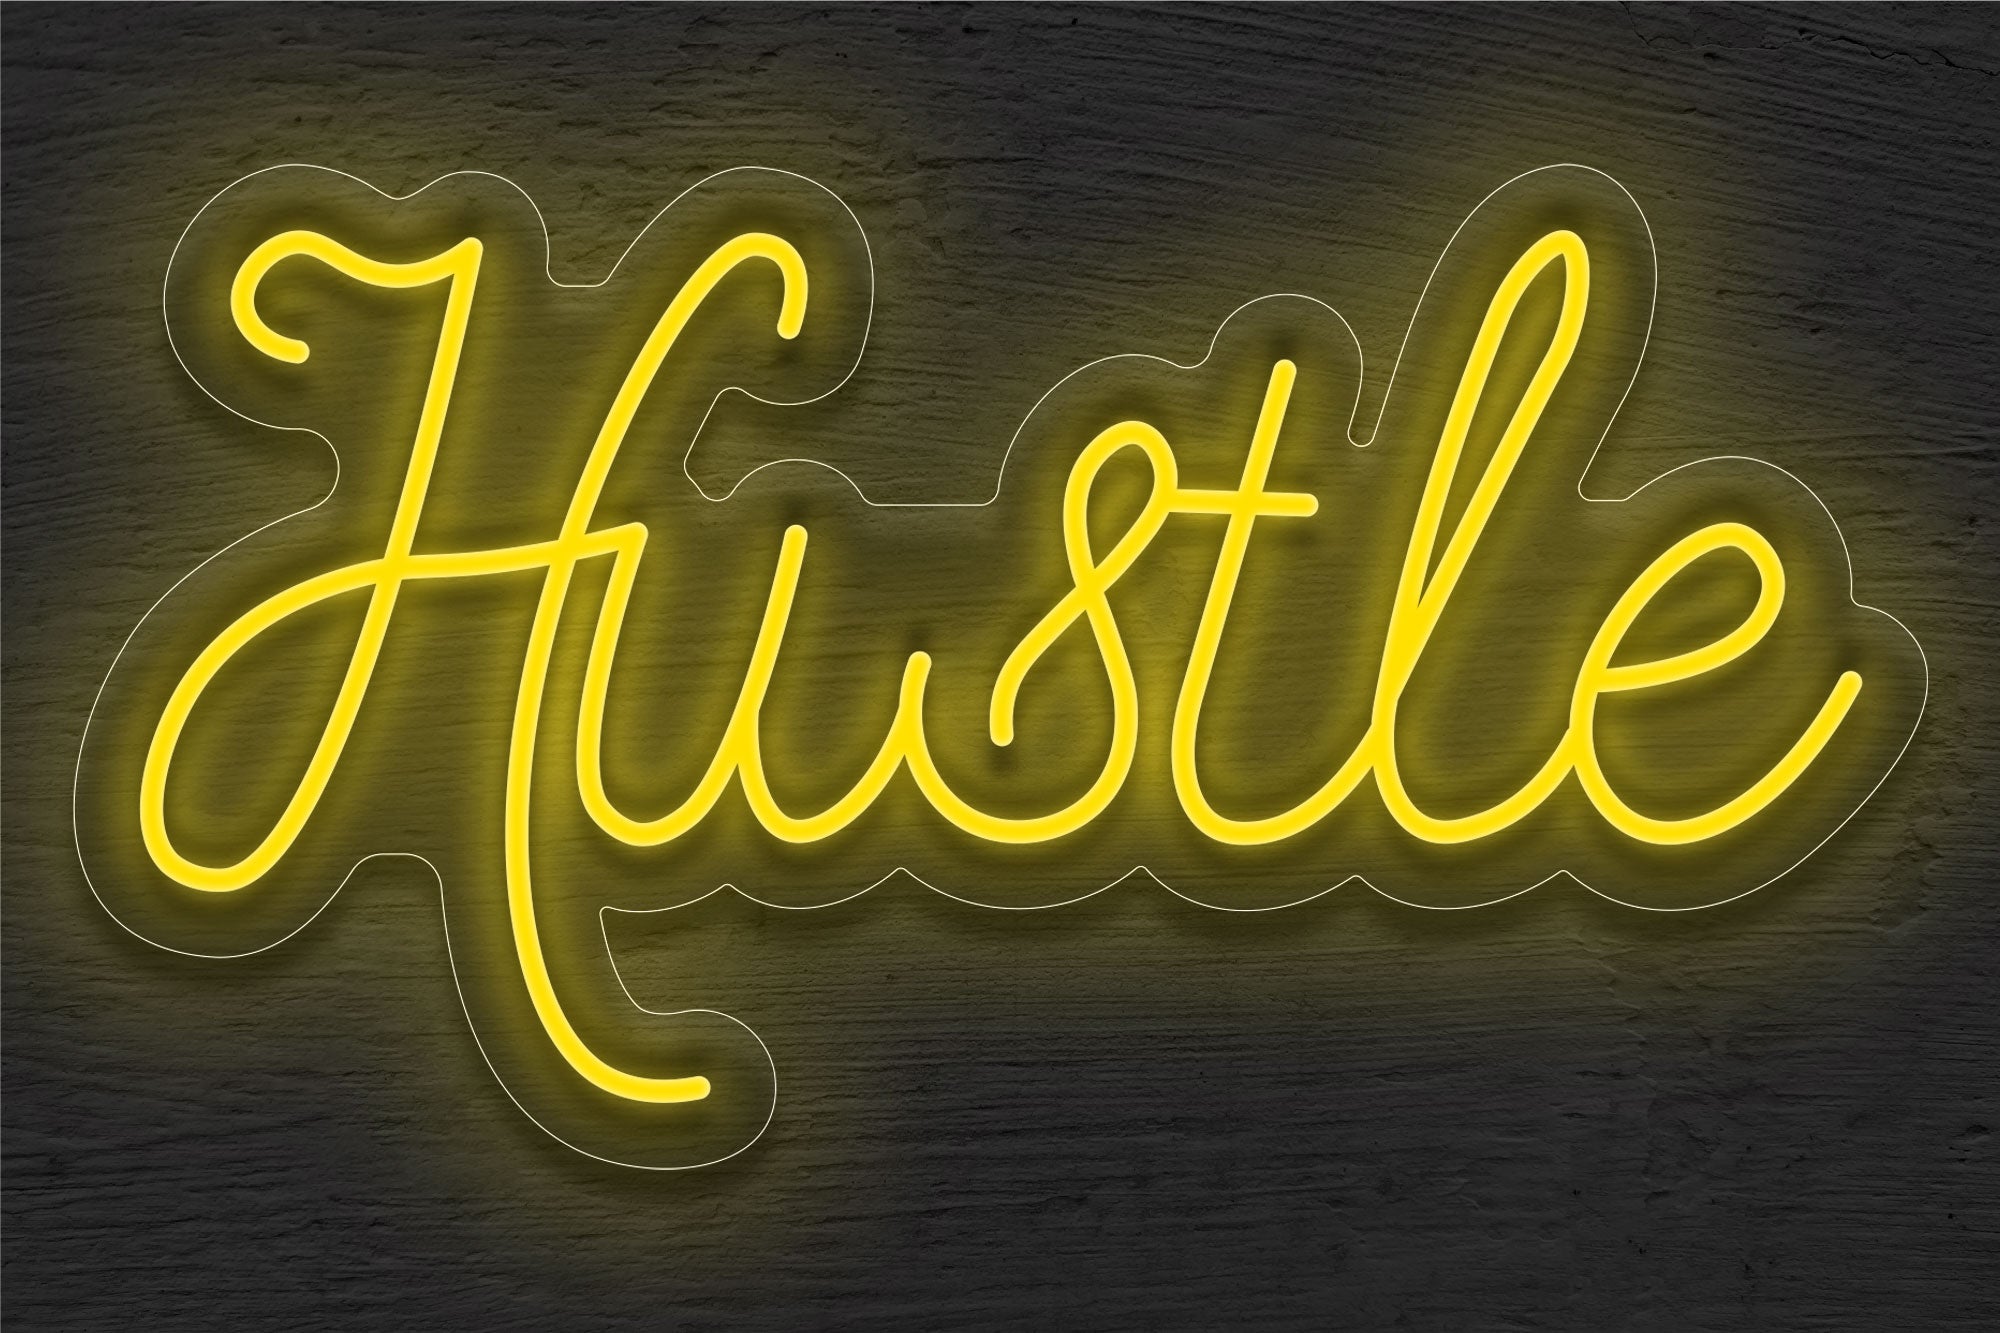 "Hustle" LED Neon Sign